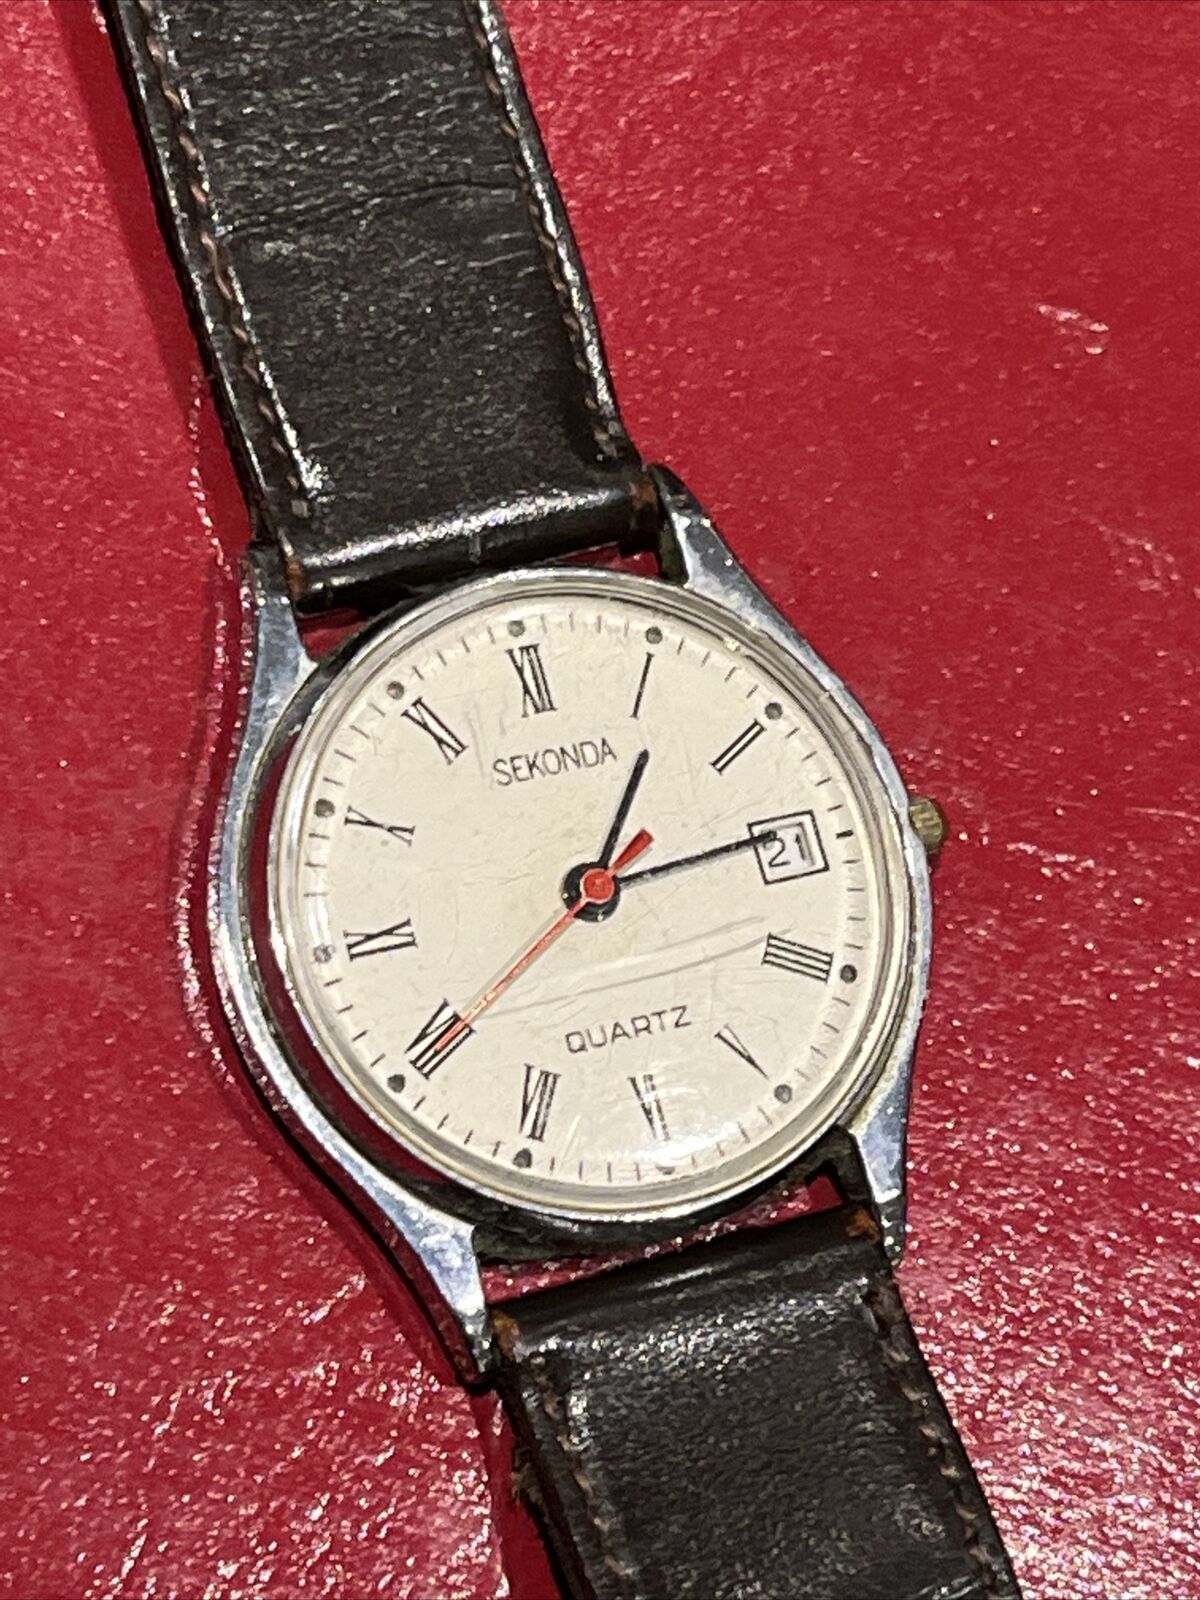 Vintage Wristwatch